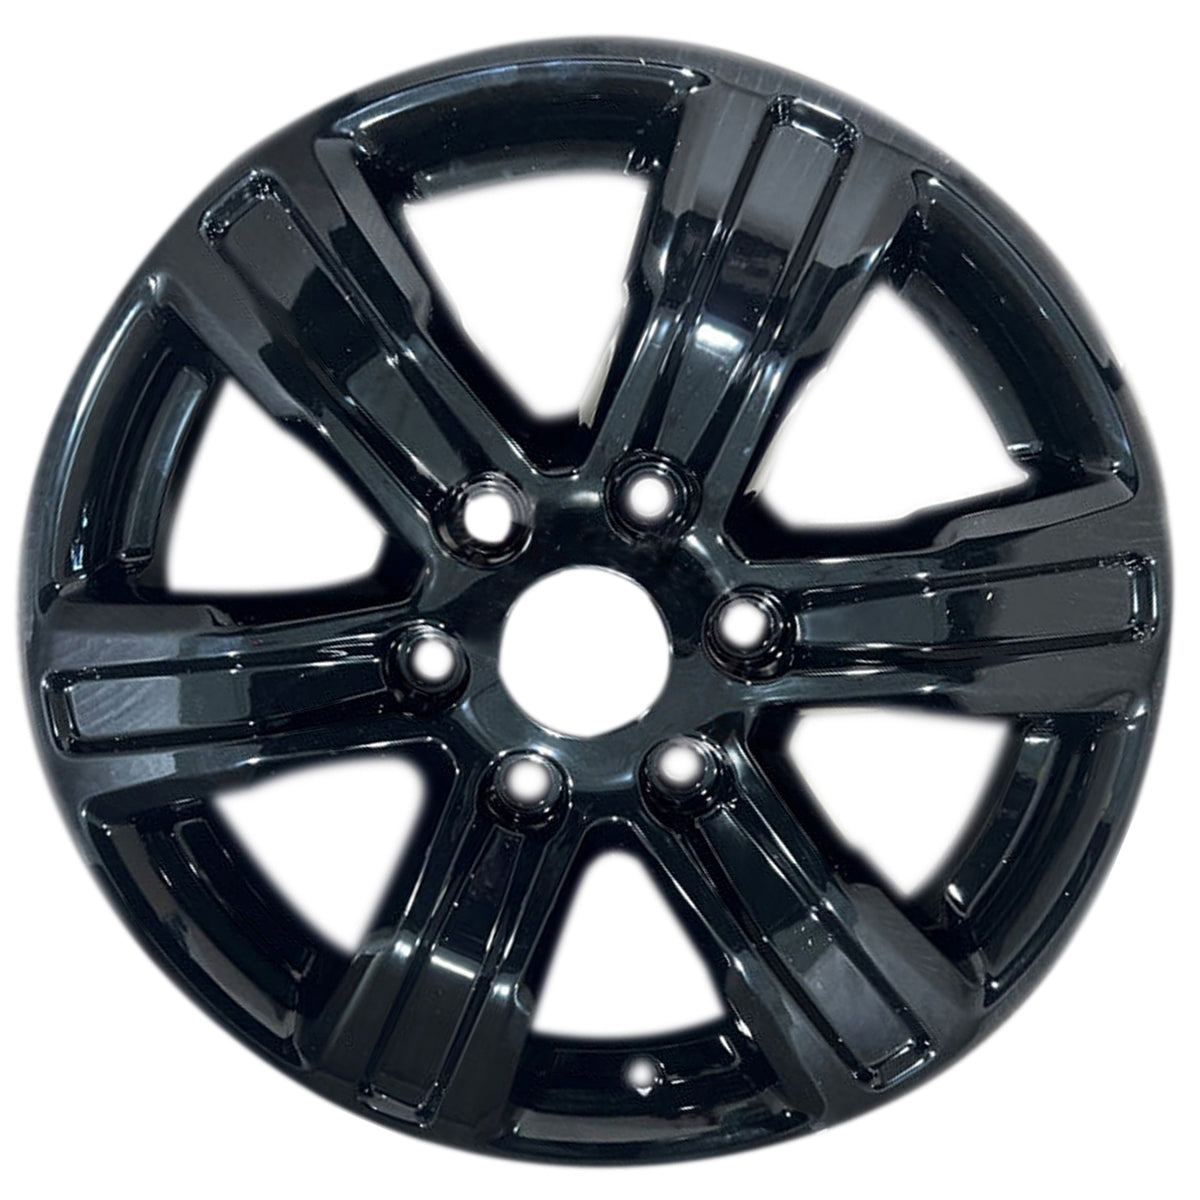 2019 Ford Ranger 17" OEM Wheel Rim Black W10228B